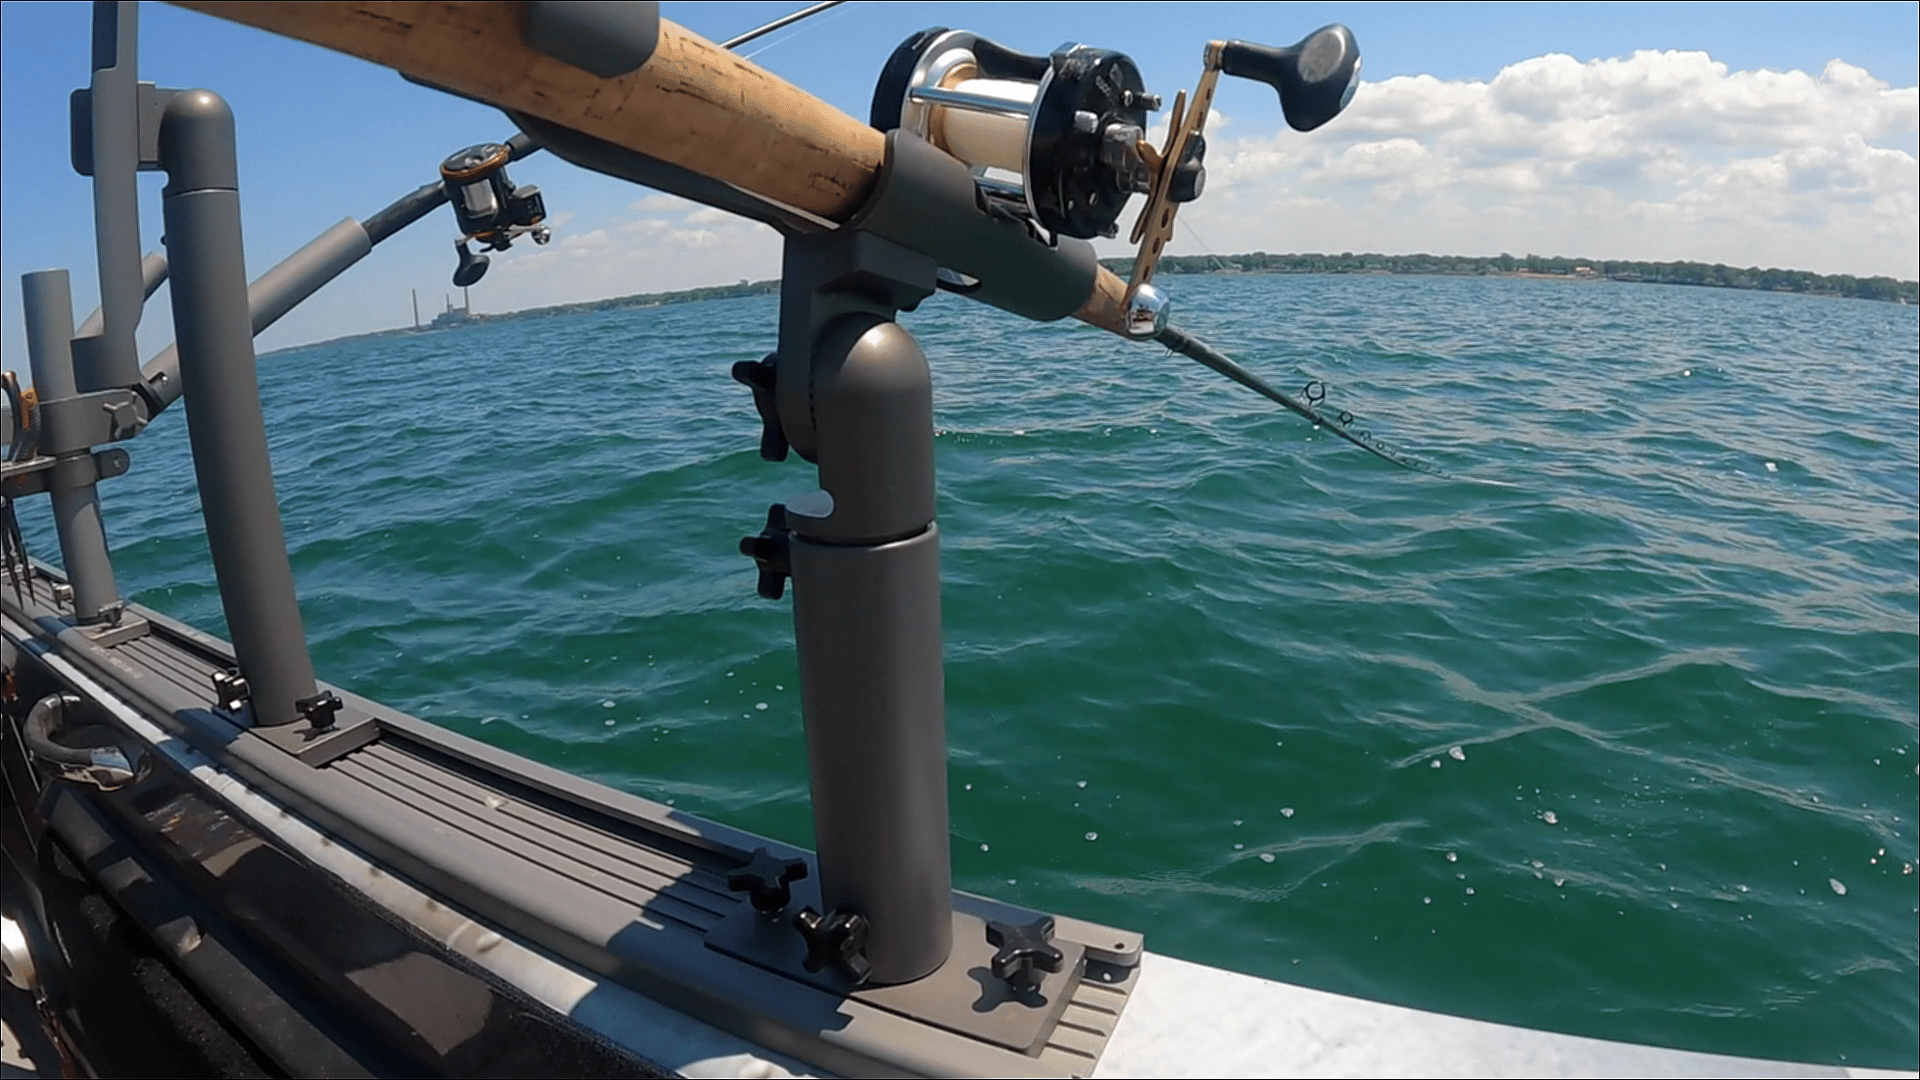 Link Boat Fishing Rod Holder,Plastic 3 Tube Rod Fishing